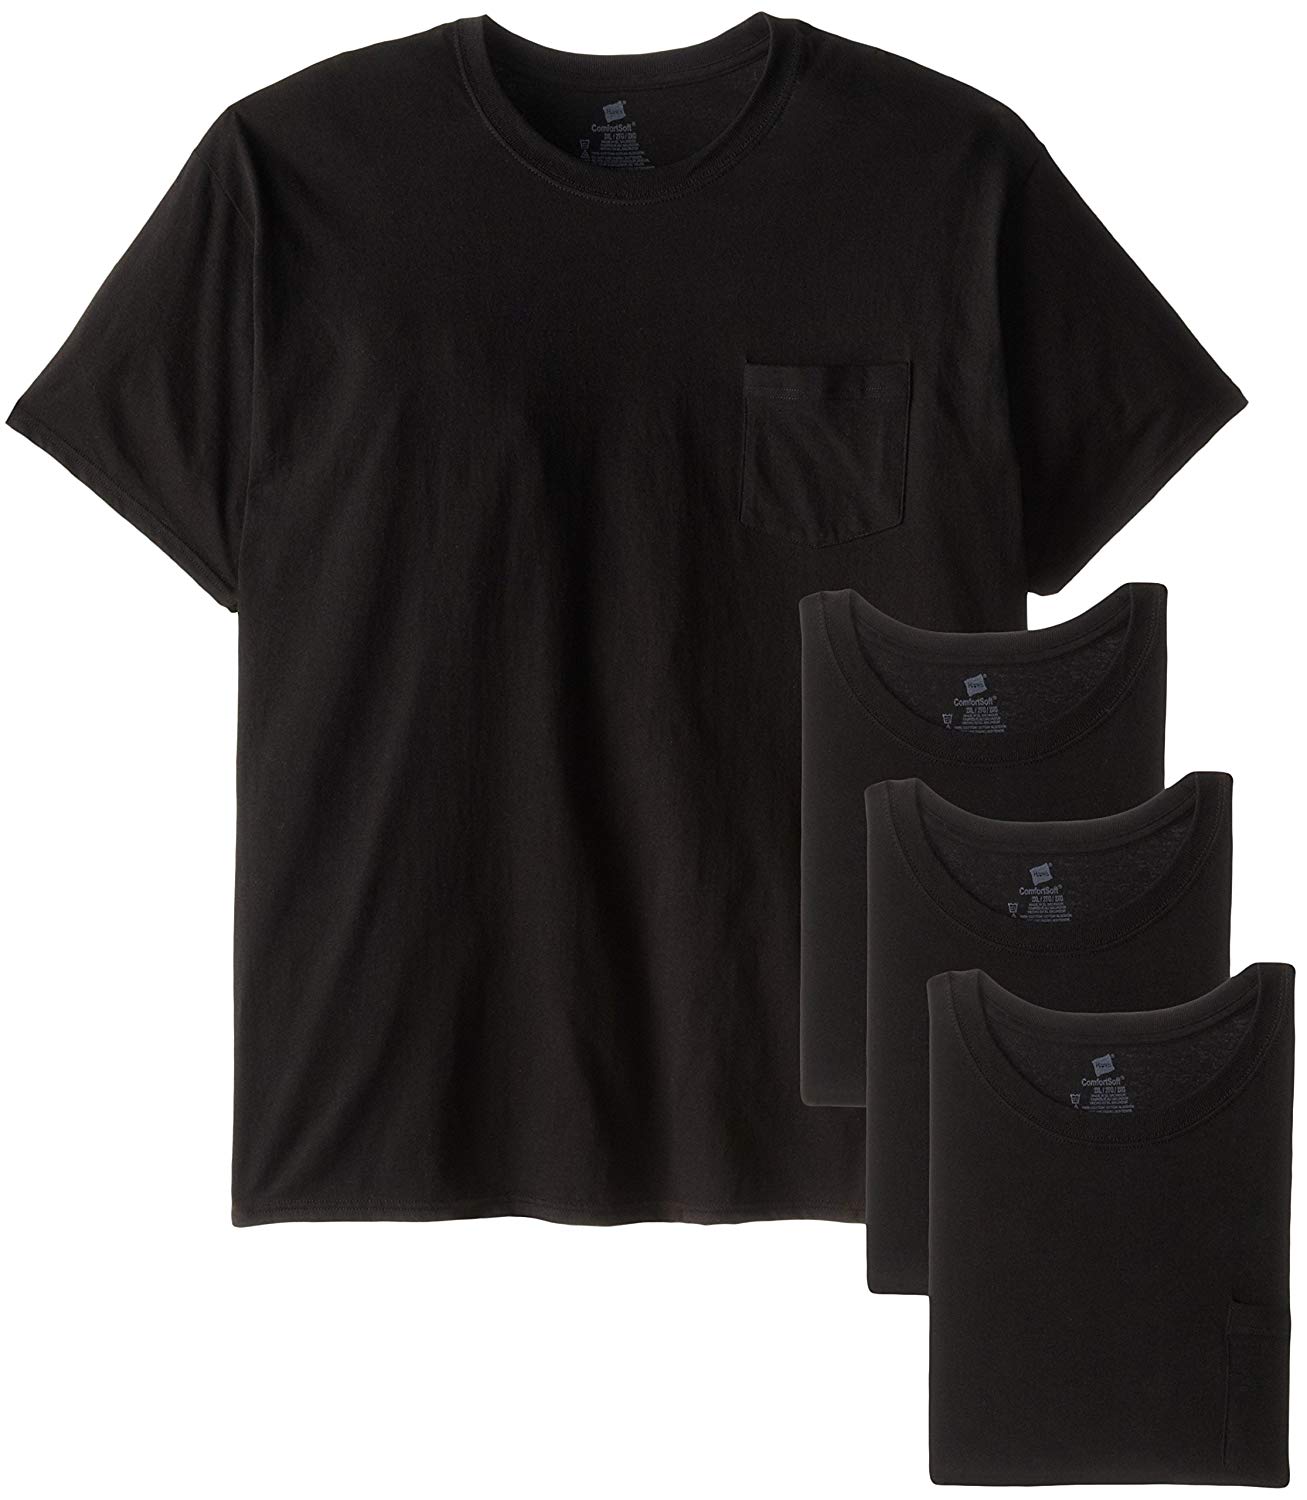 Hanes ComfortSoft 4-Pack t-shirts (Large 42-44